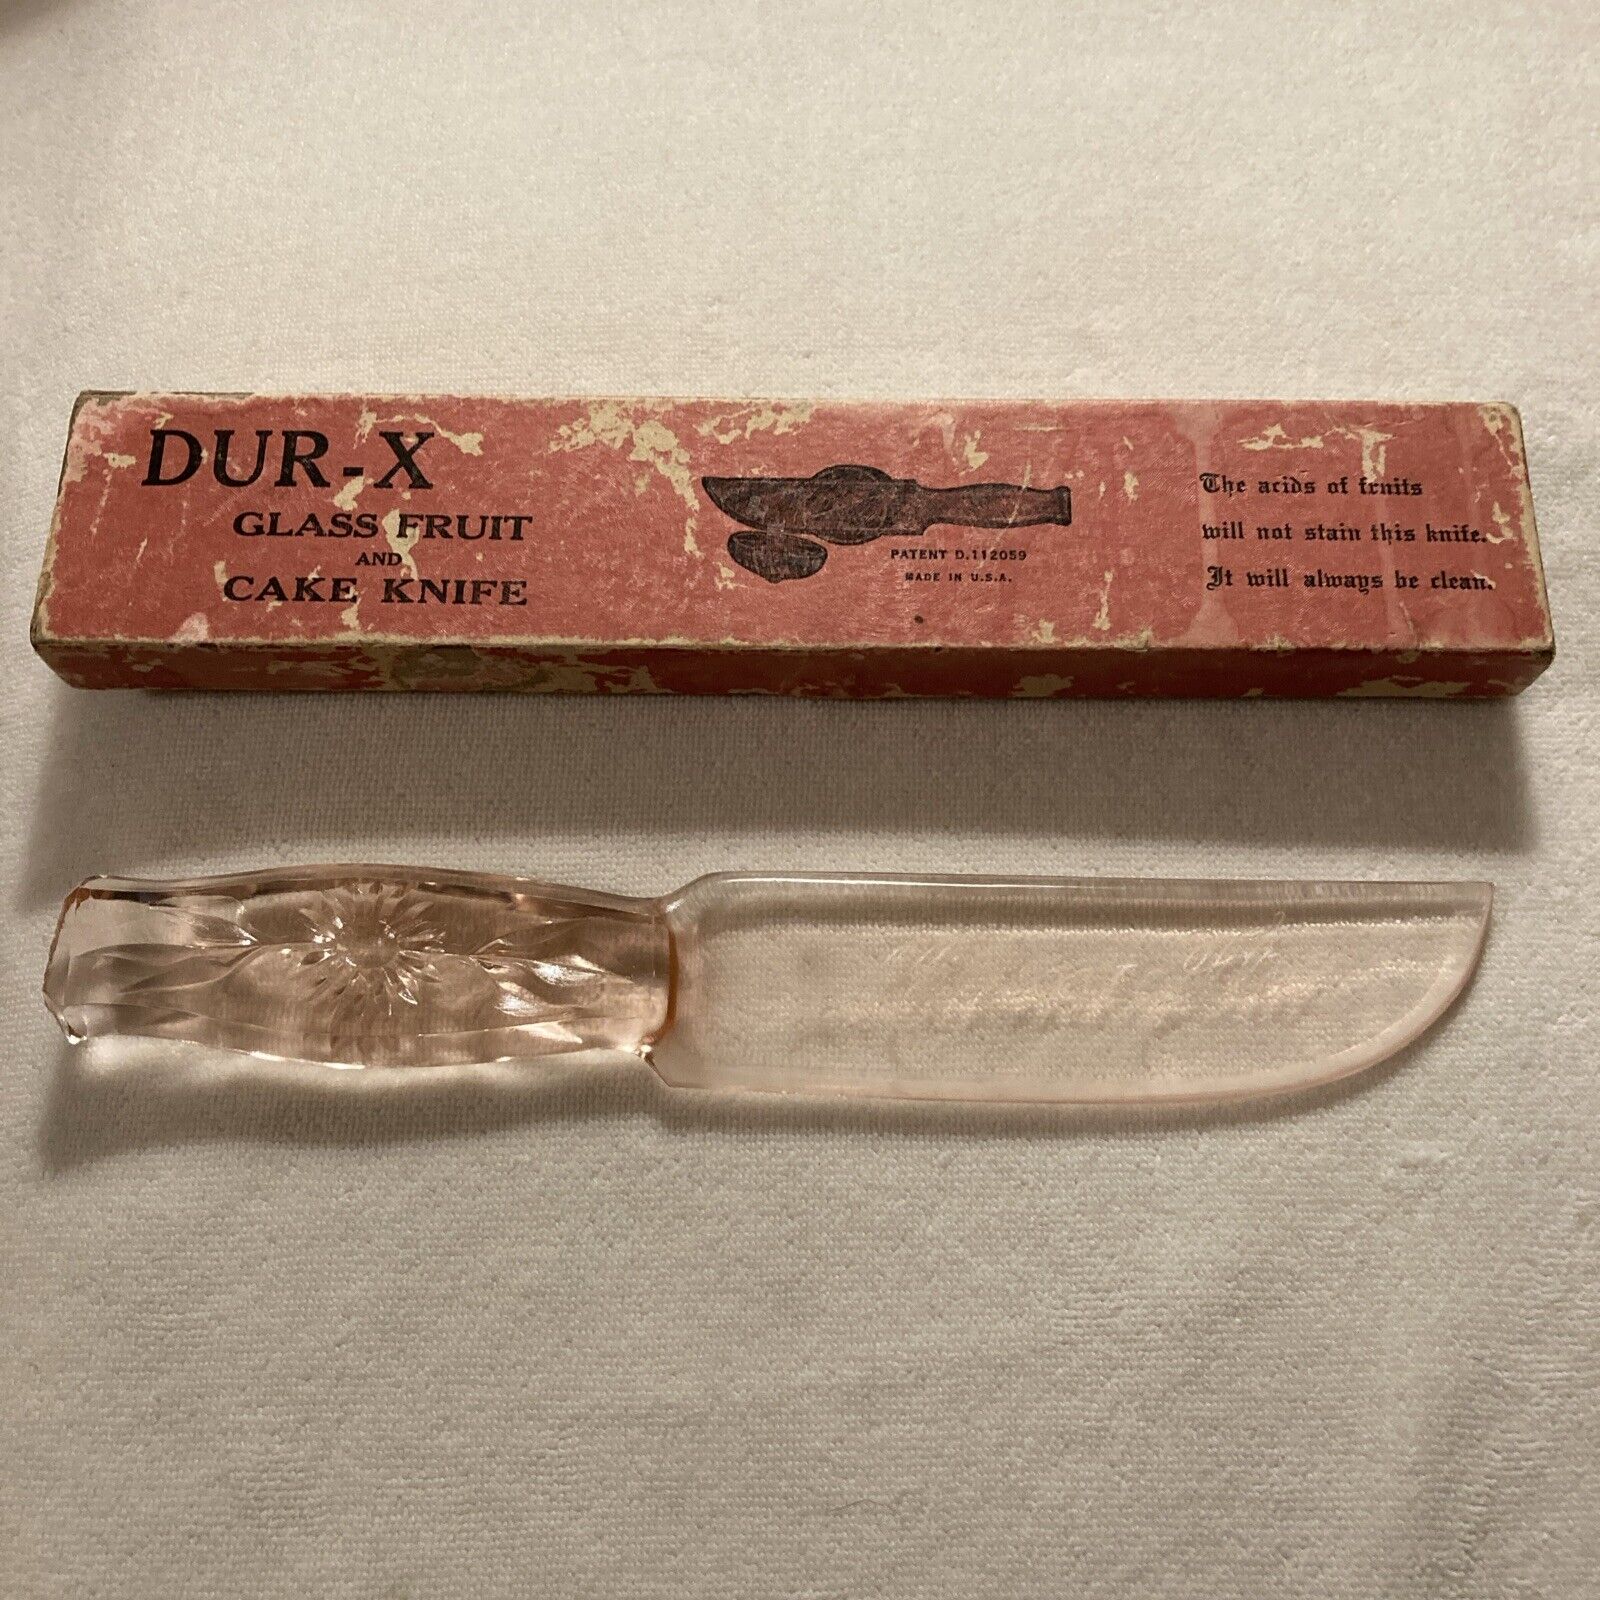 DUR-X Pink Depression Glass Fruit & Cake Knife W/ Box Sharp Edge Engraved